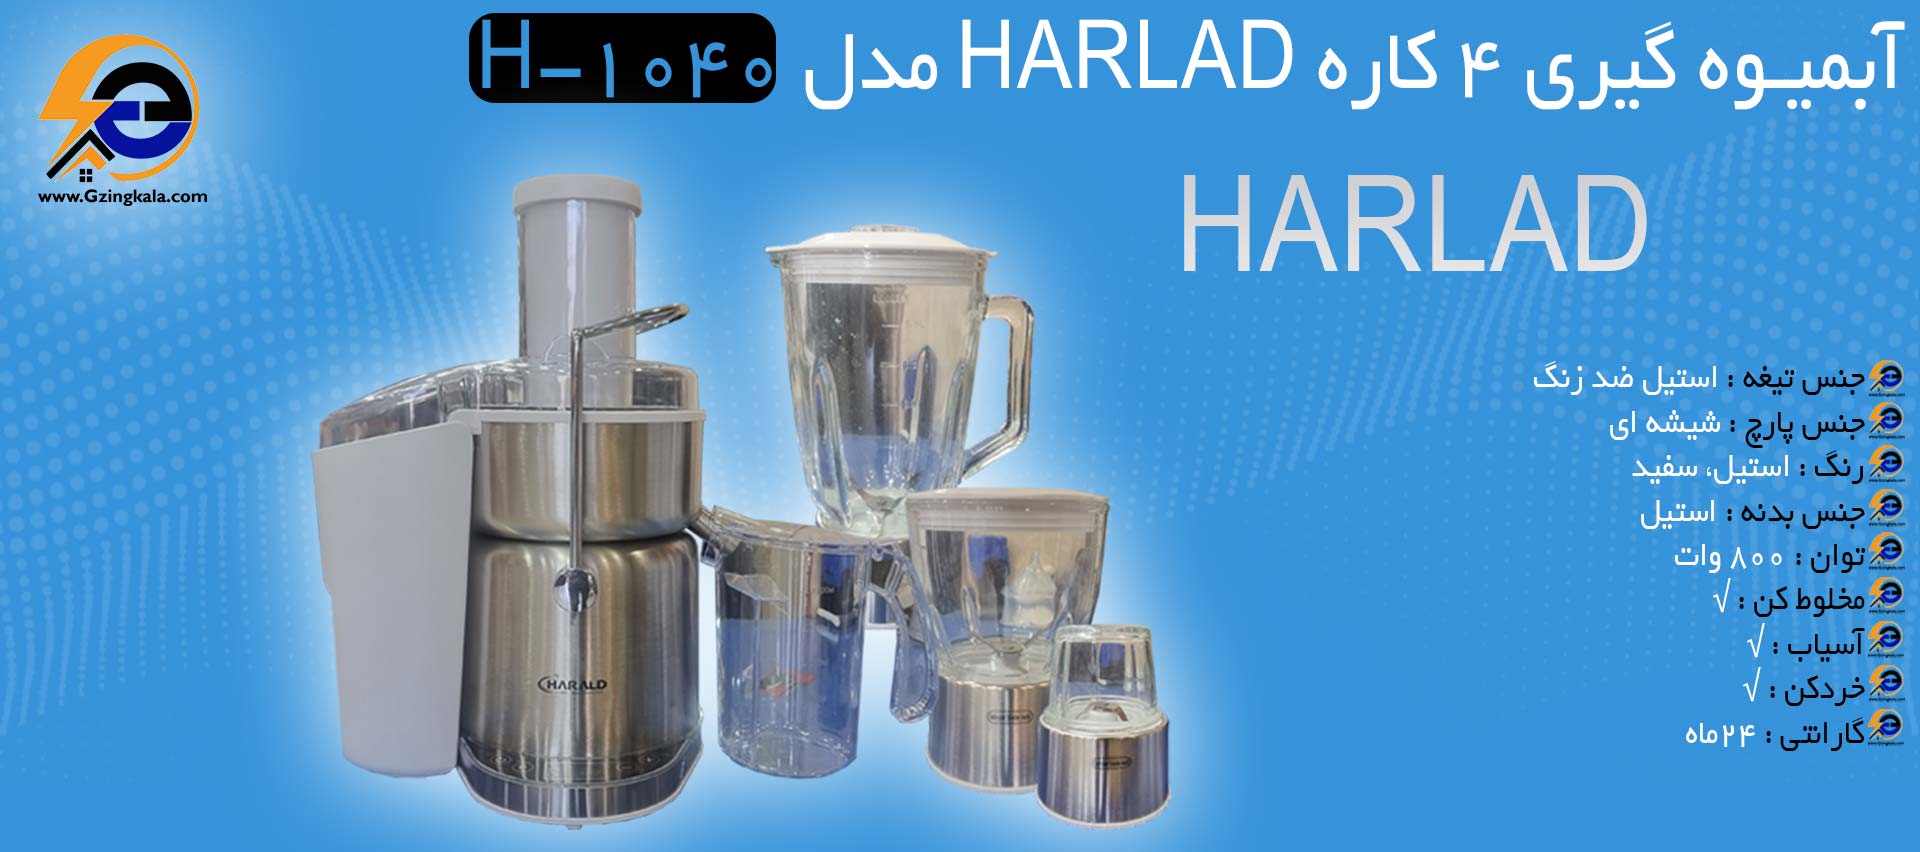 آبمیوه گیری 4 کاره HARLAD مدل H-1040